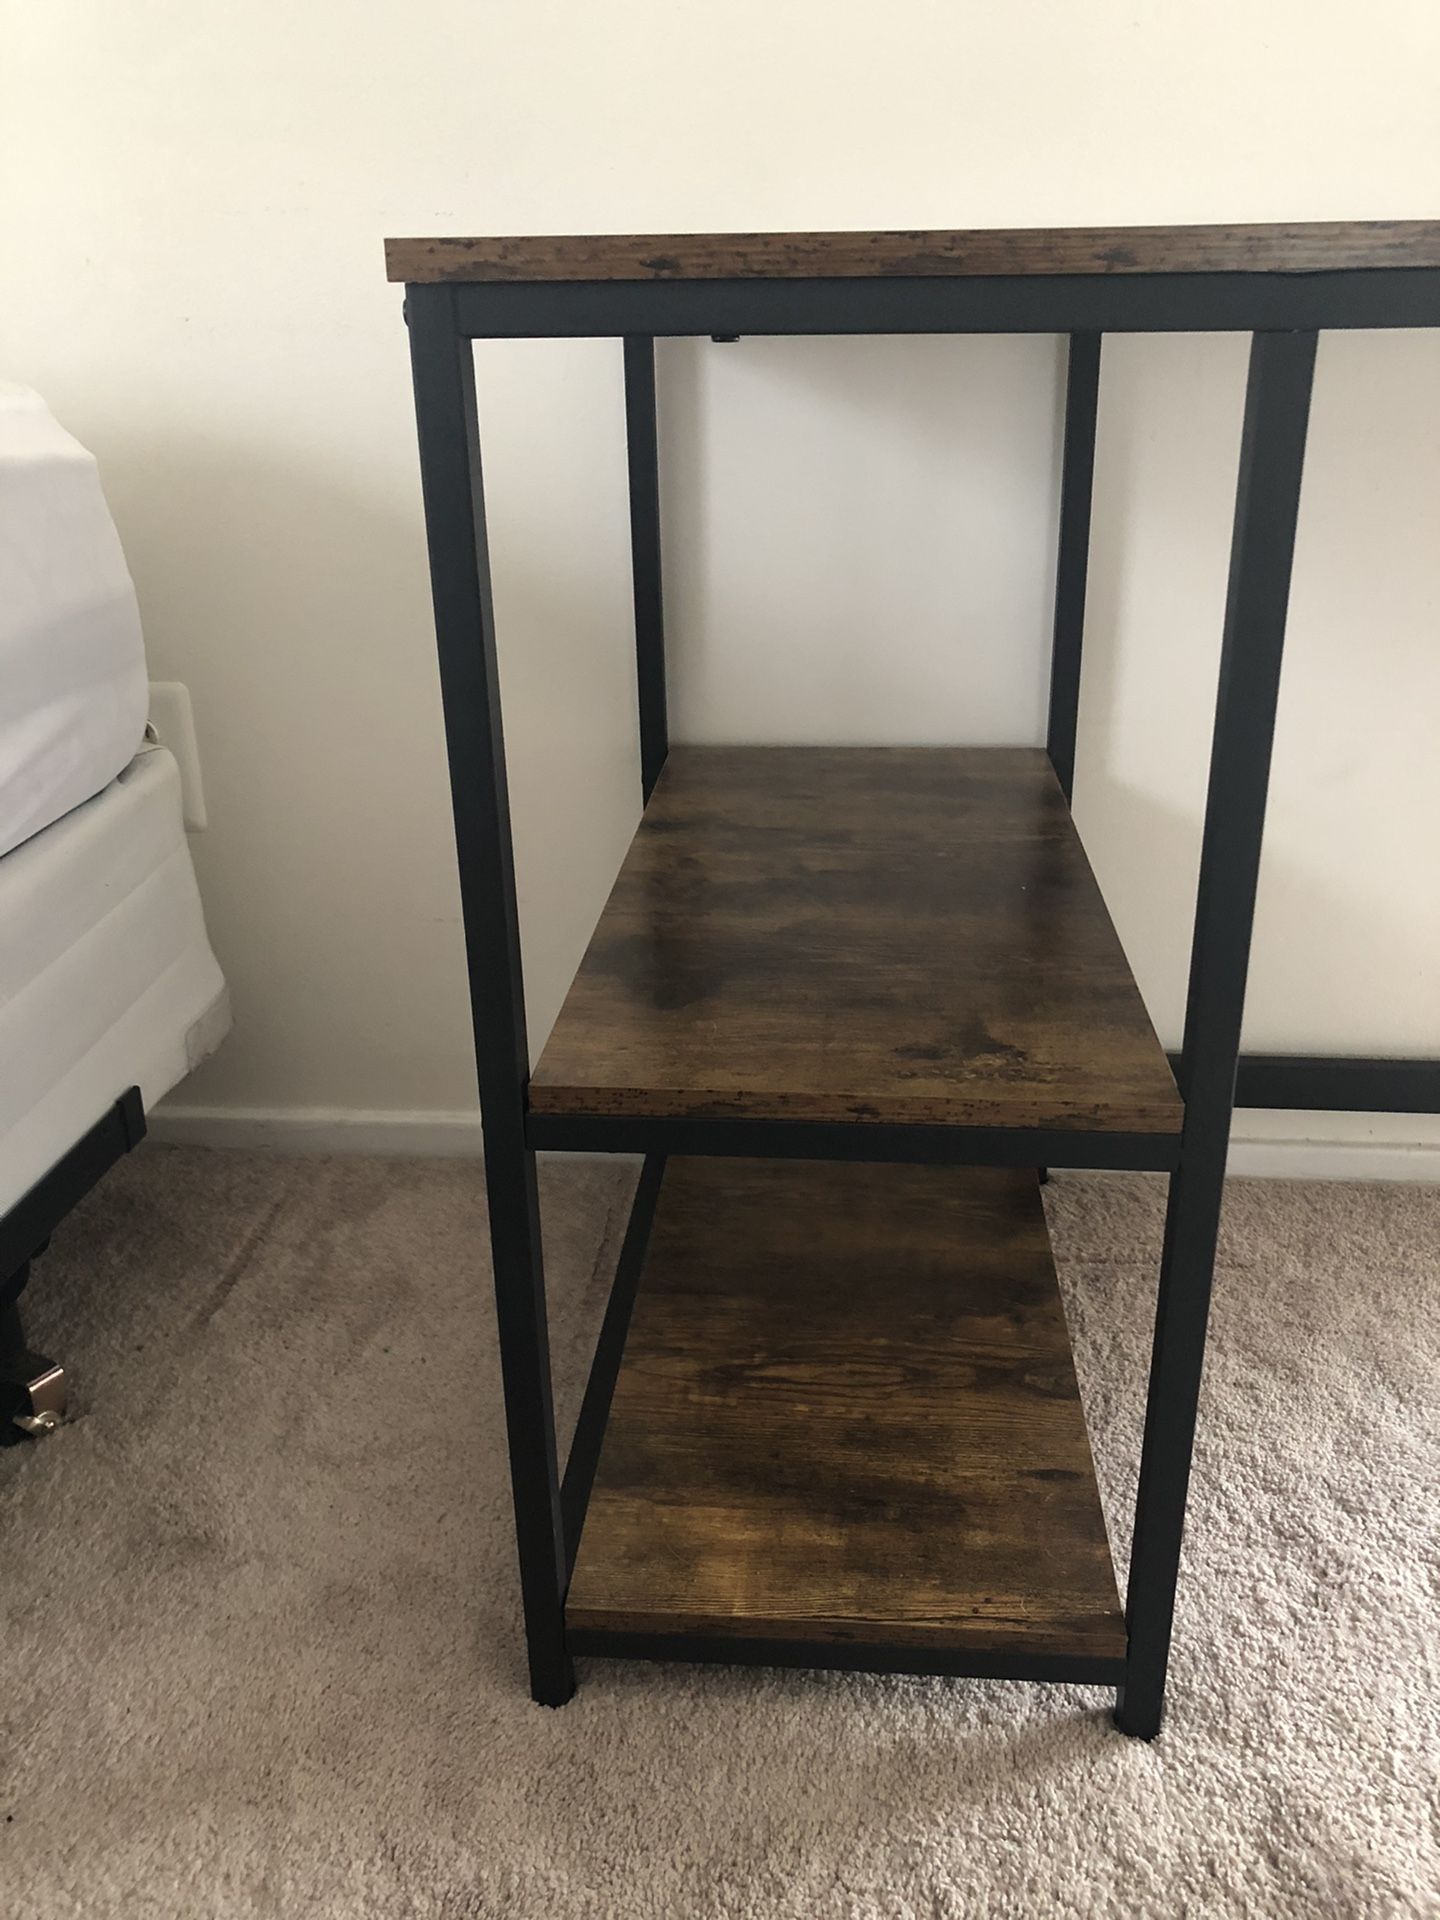 Desk- Wood/metal with shelves